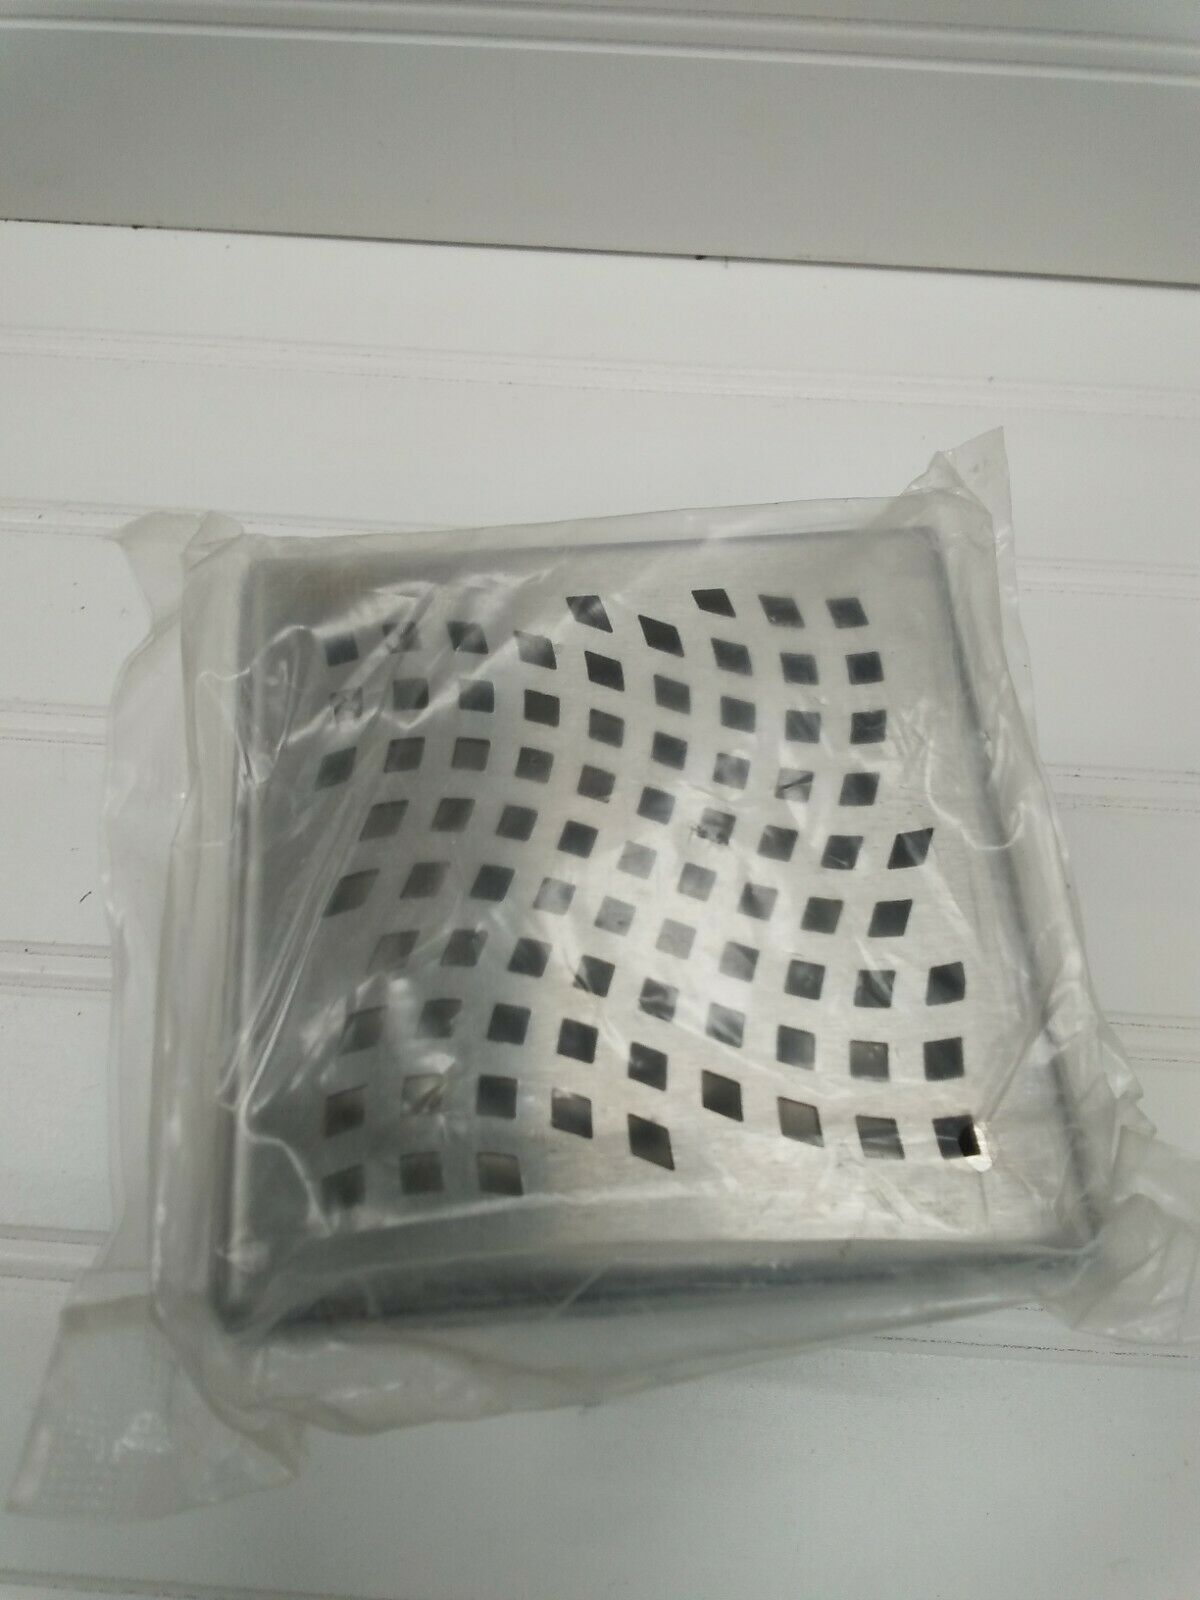 Designline 4. X 4 In. Stainless Steel Square Shower Drain Wave Pattern Drain